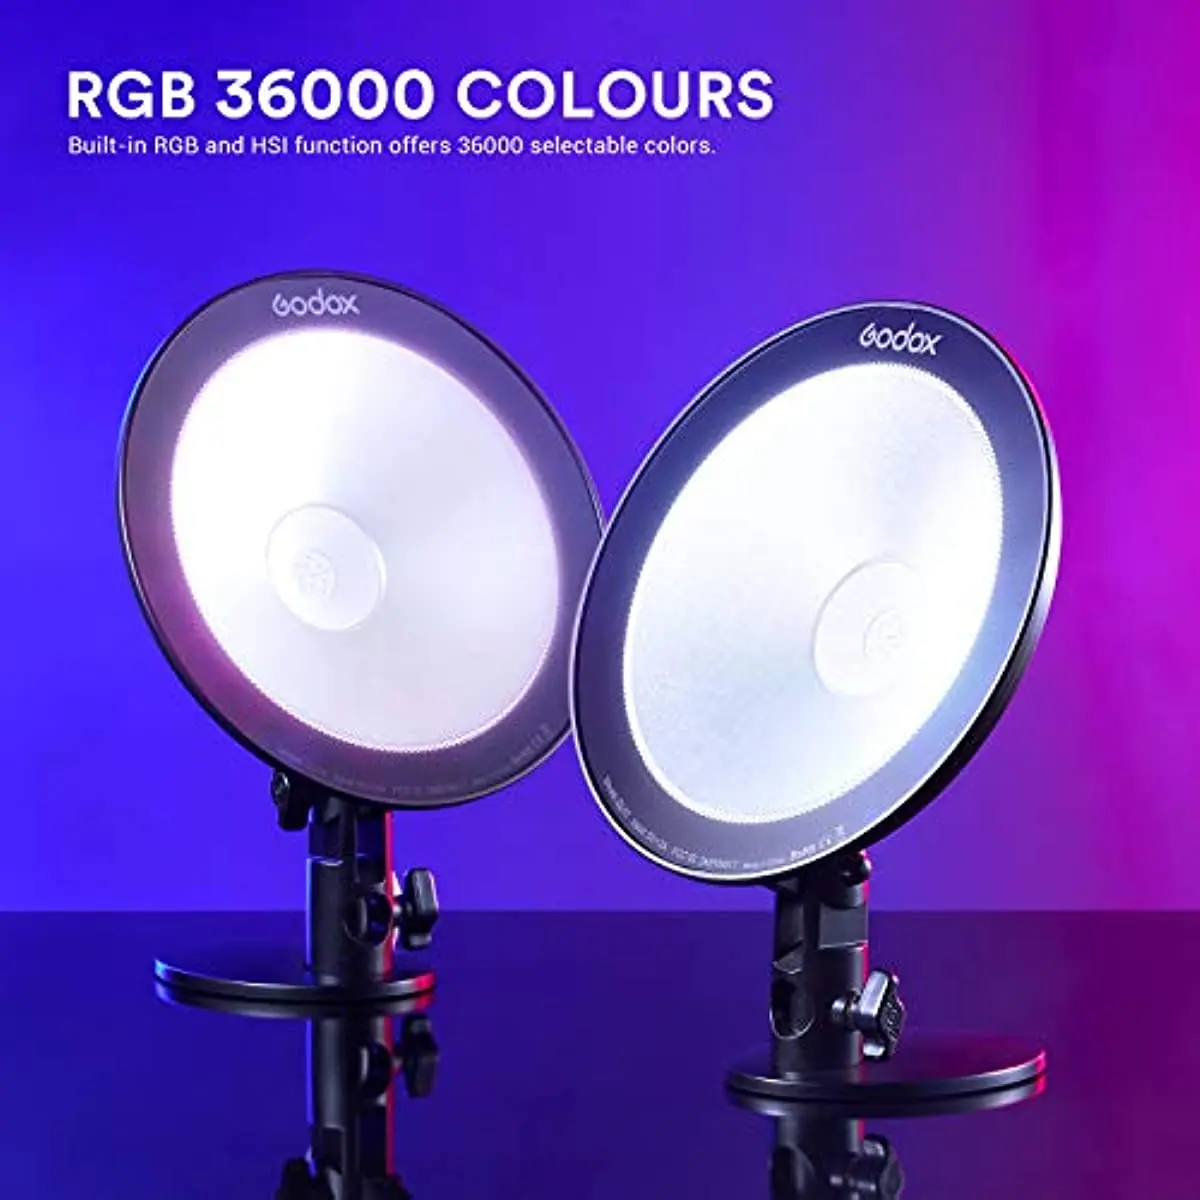 Godox CL10 RGB אור מקיף 36000 צבעים LED RGB האווירה אור רקע עם 39 מיוחדים אפקטים של אור האפליקציה/שליטה מרחוק